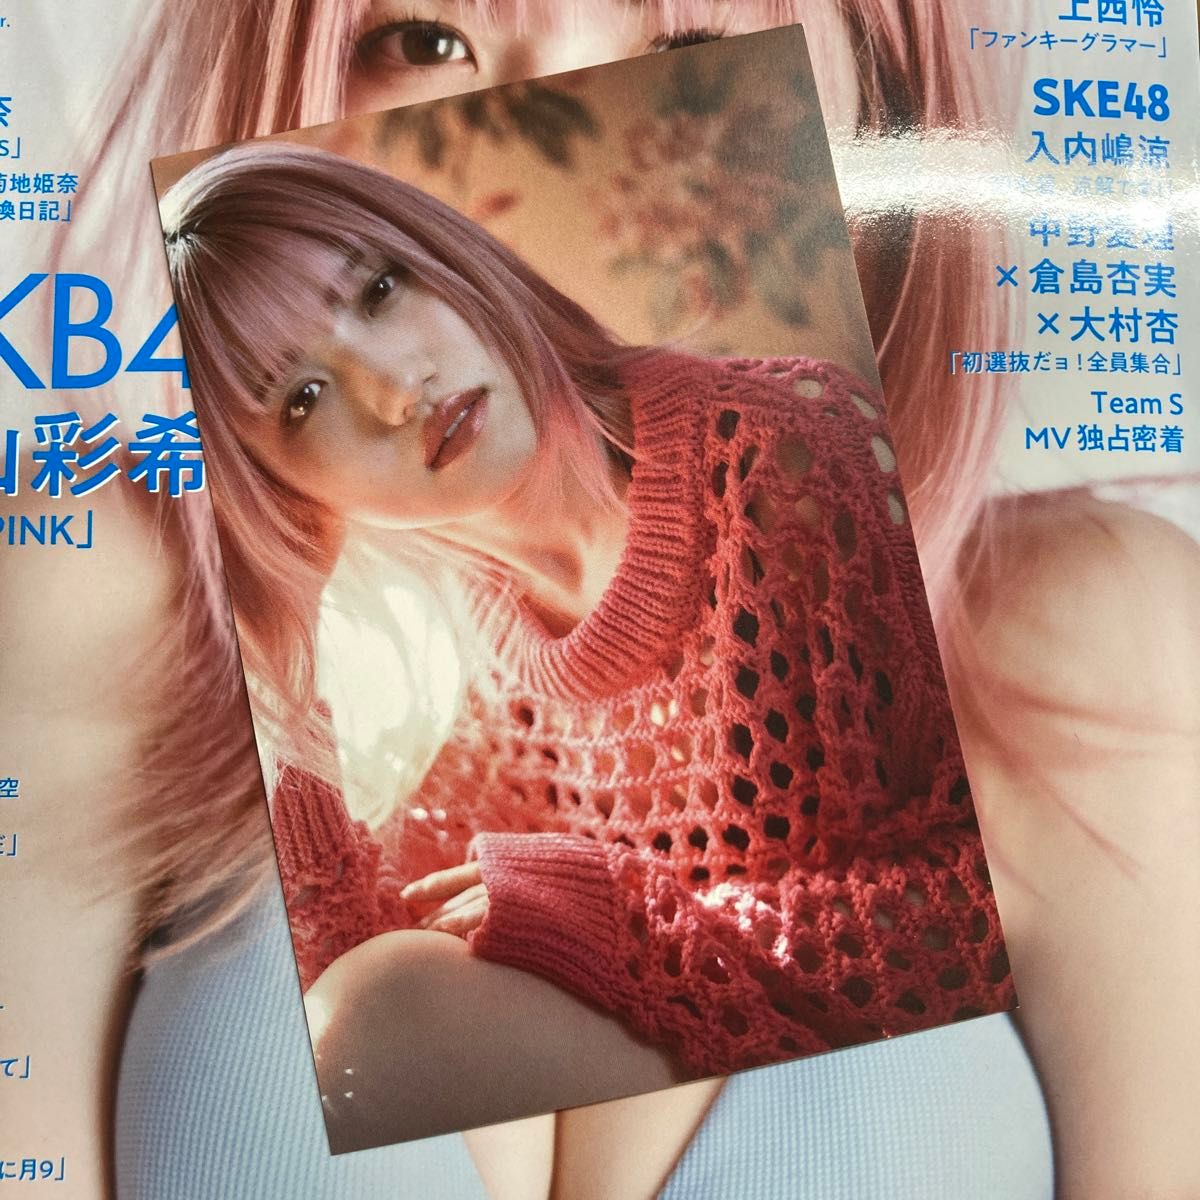 BUBKA 4月号増刊 AKB48 村山彩希ver. 桃色転生ビキニ